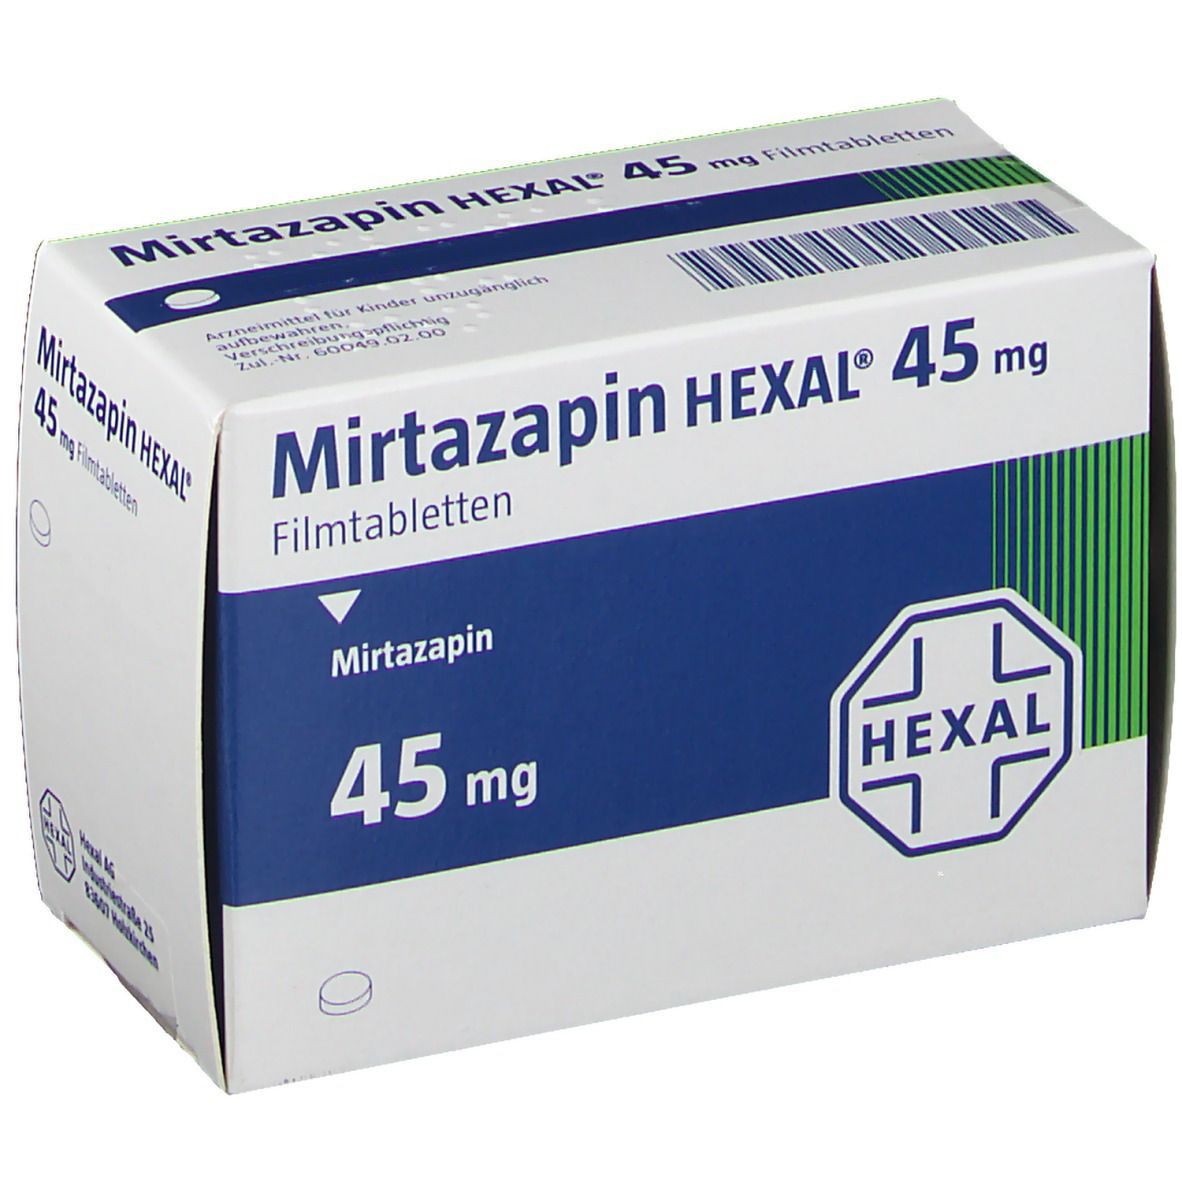 Mirtazapin HEXAL® 45 mg